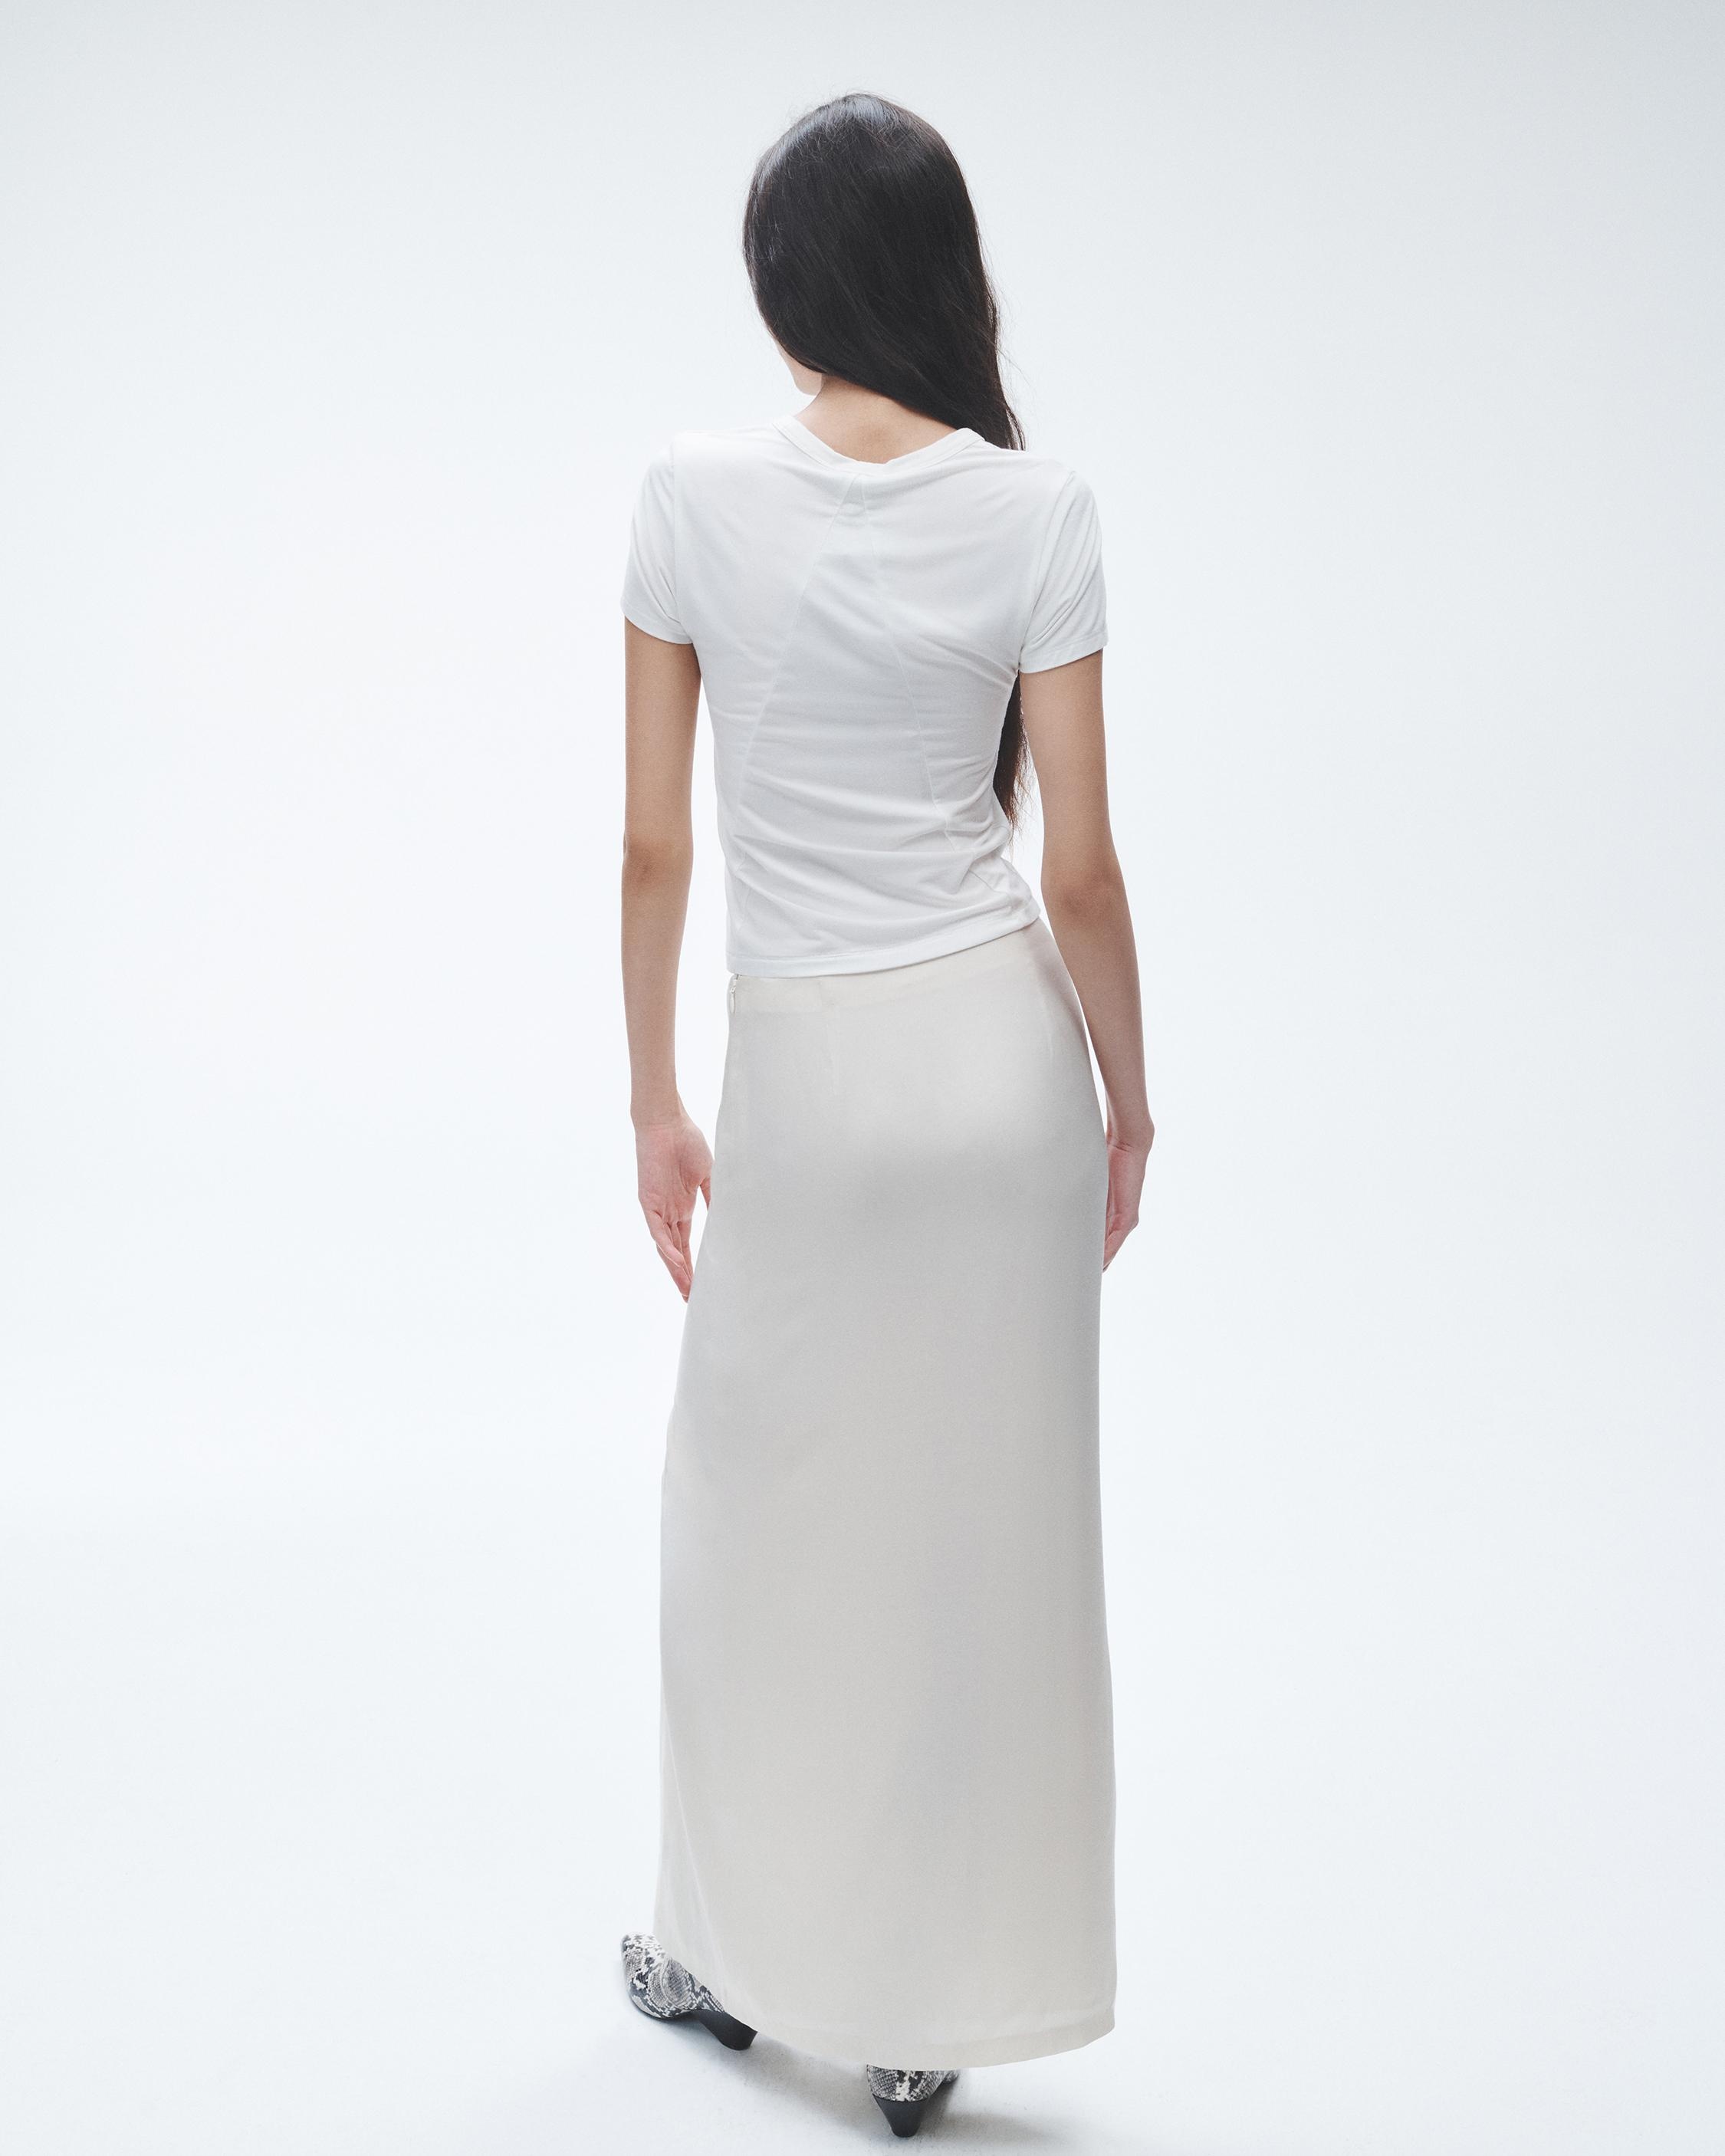 Ilana Silk Skirt
Maxi - 4